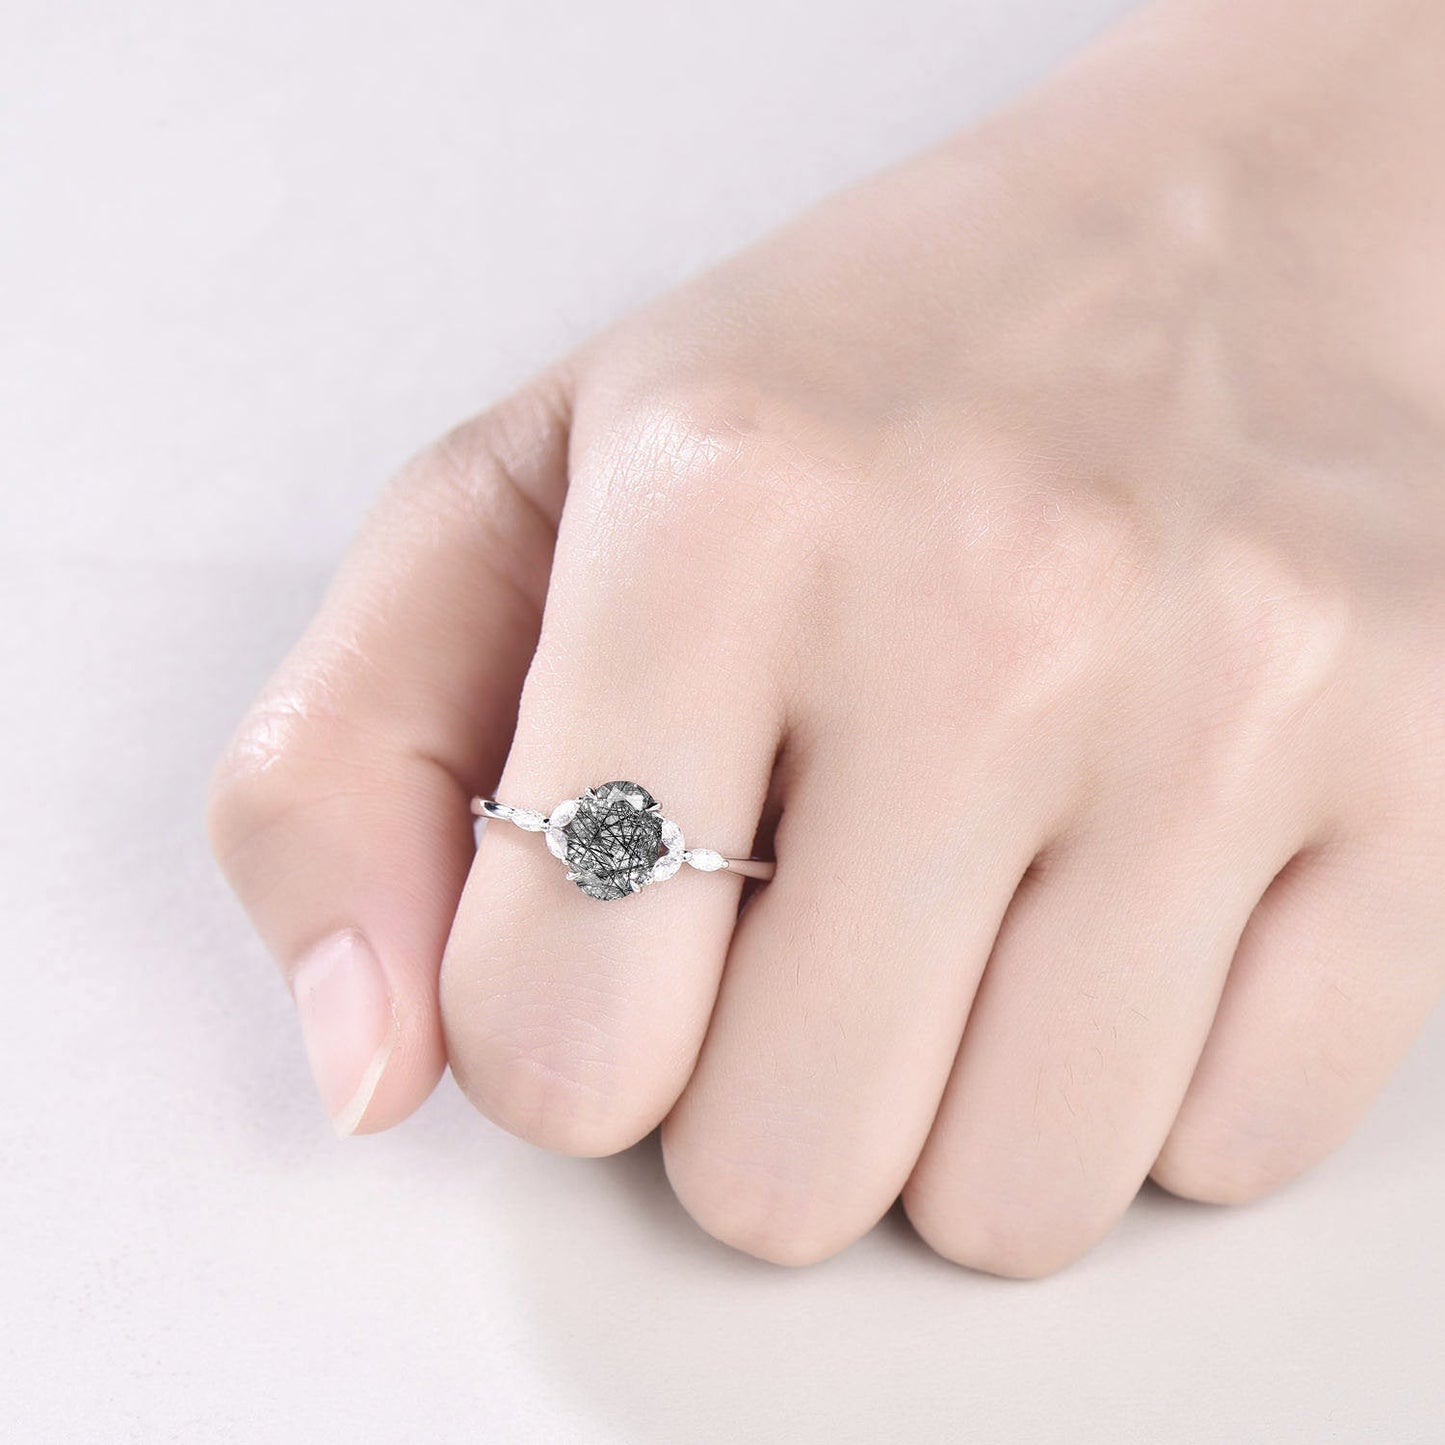 Oval cut black rutilated quartz engagement ring white gold ring art deco moissanite ring black stone ring marquise ring promise ring gift